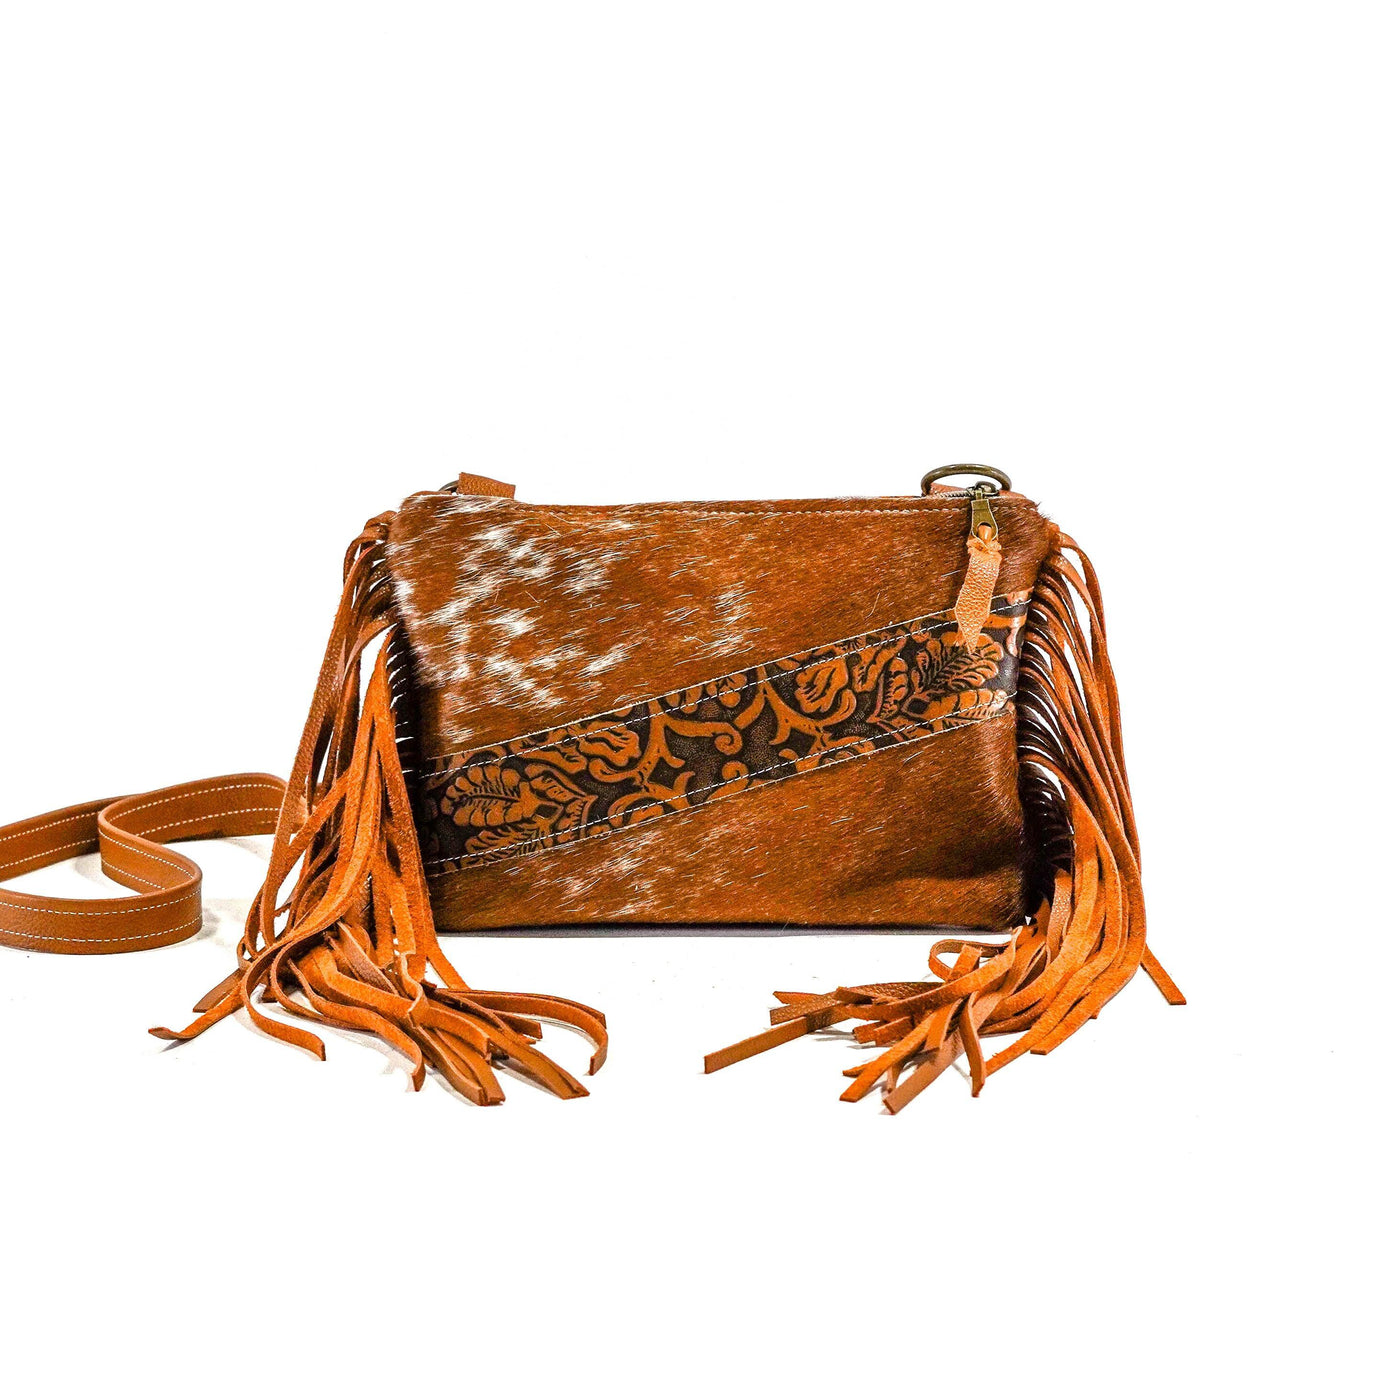 Patsy - Longhorn w/ Honey Tool-Patsy-Western-Cowhide-Bags-Handmade-Products-Gifts-Dancing Cactus Designs